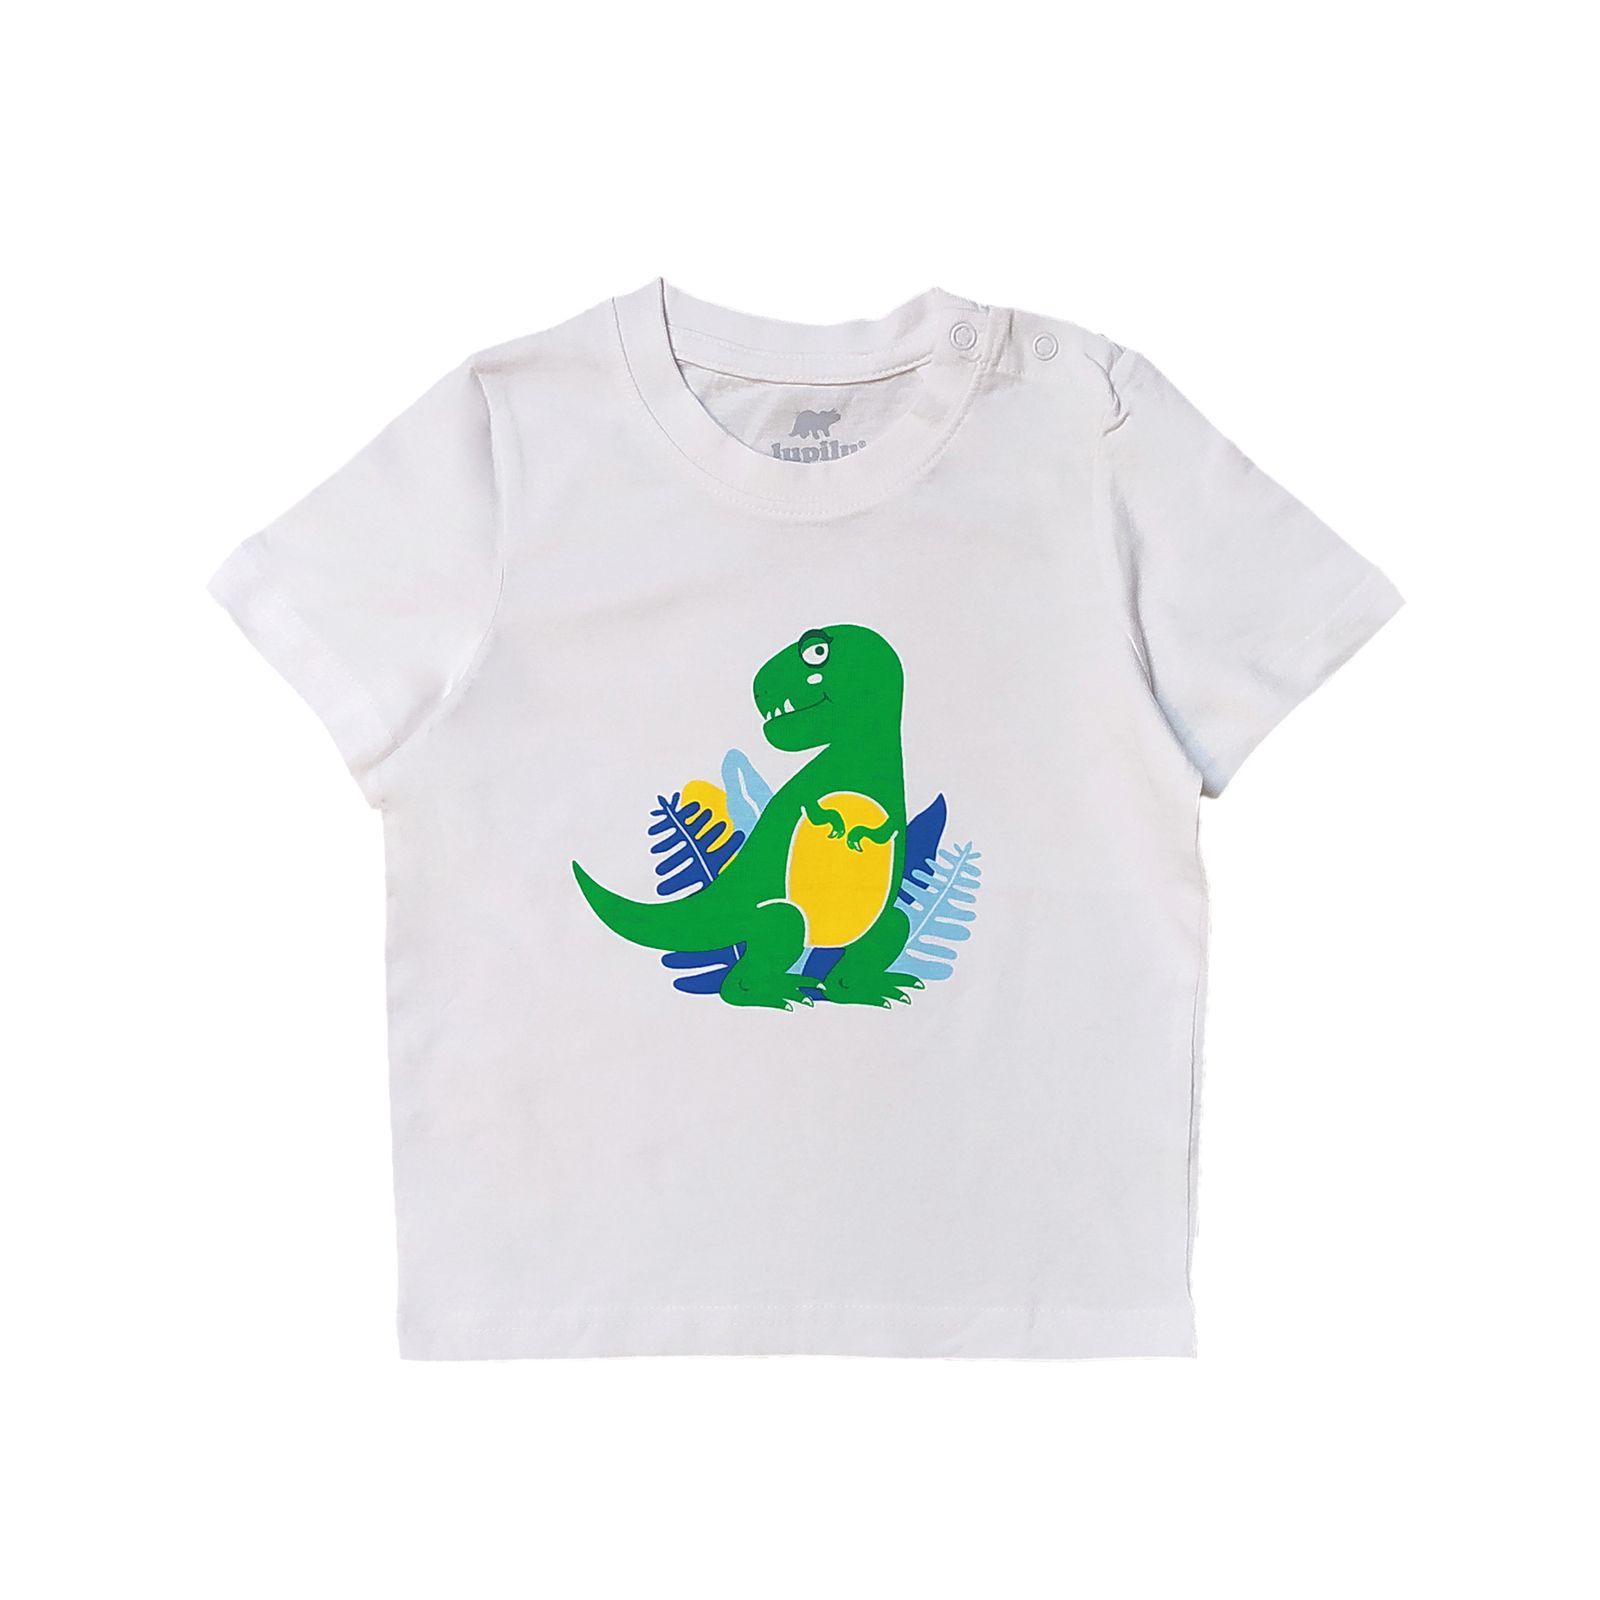 تی شرت بچگانه لوپیلو طرح دایناسور کد B12 -  - 1